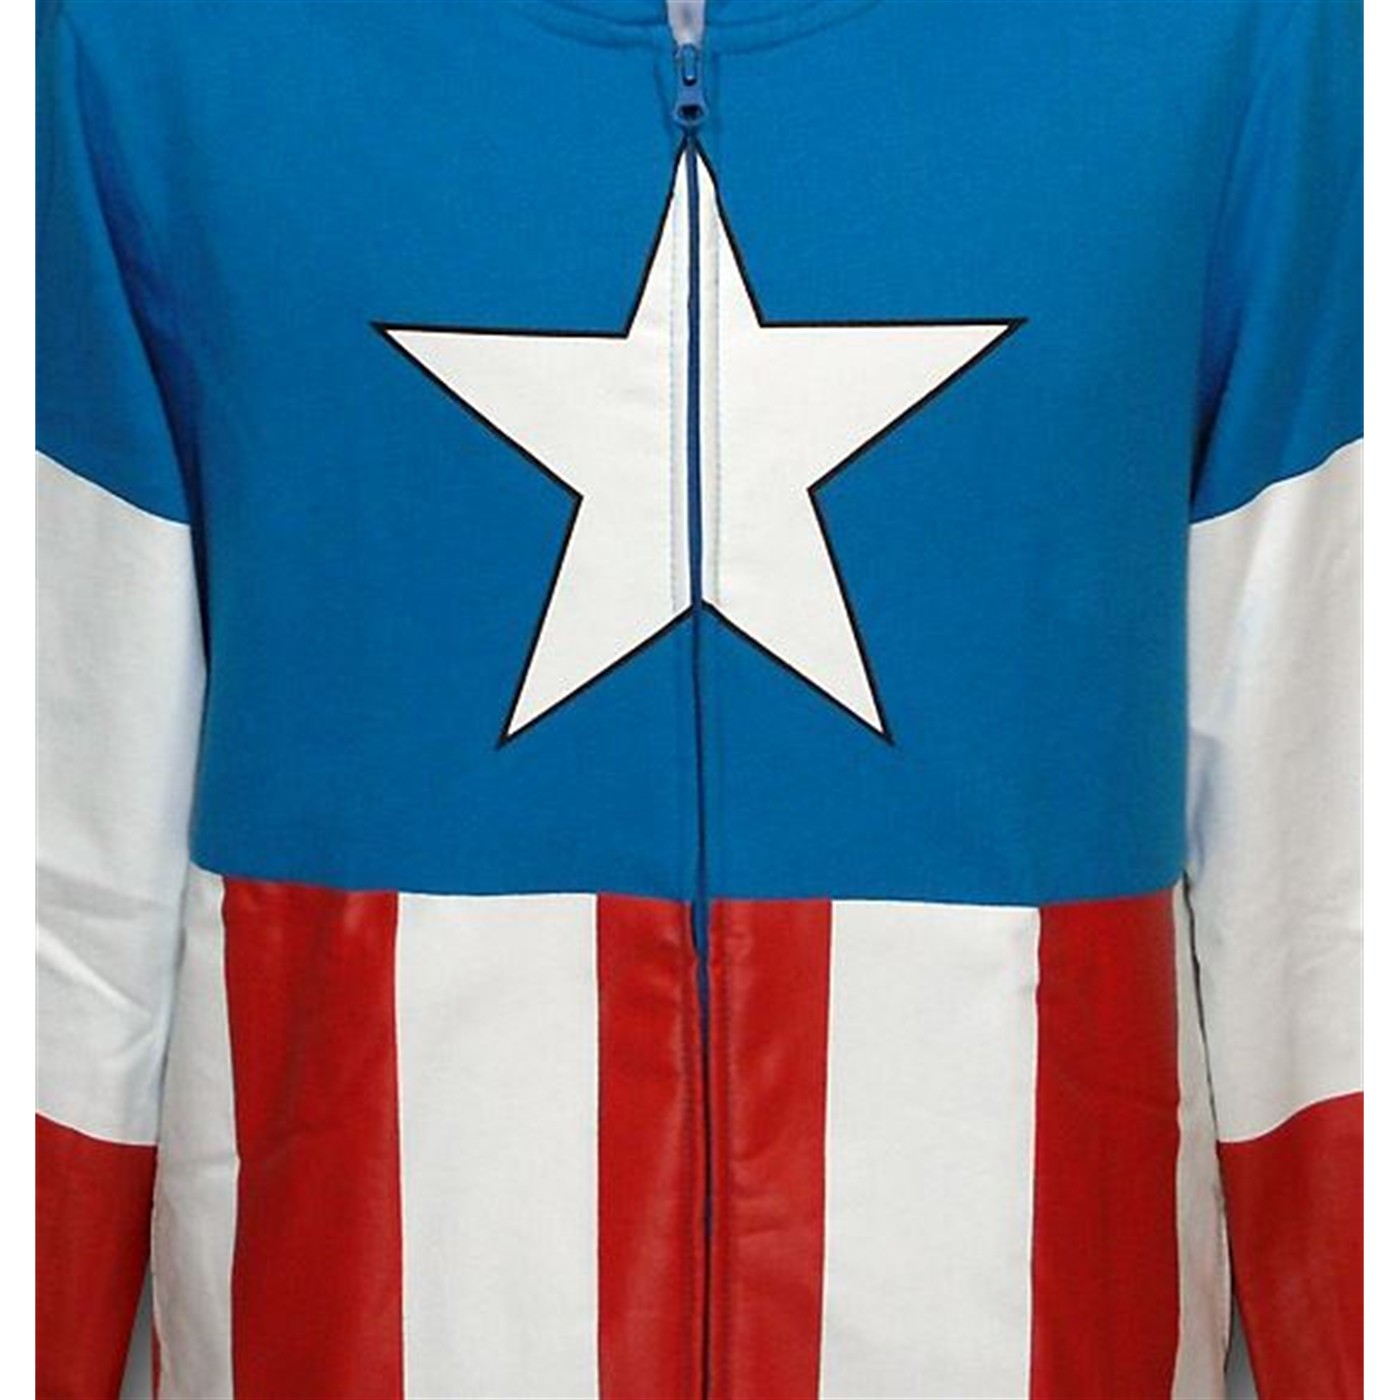 Captain America Light Blue Zip-Up Costume Hoodie